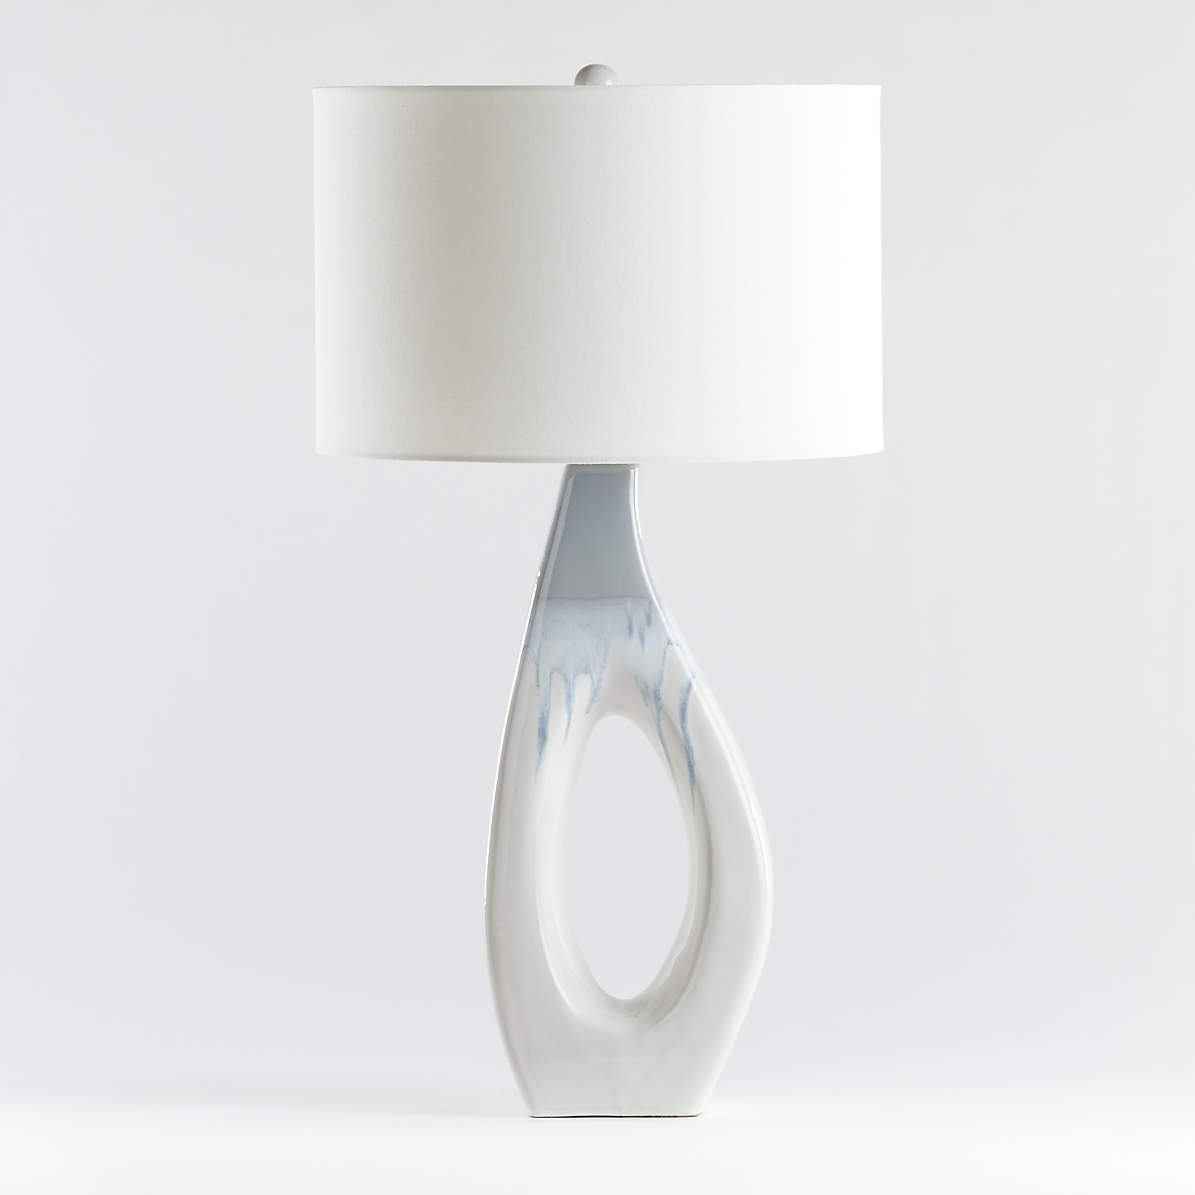 https://cb.scene7.com/is/image/Crate/NeveSculpturalTableLampSHS20/$web_pdp_main_carousel_zoom_med$/240201080719/neve-sculptural-table-lamp.jpg